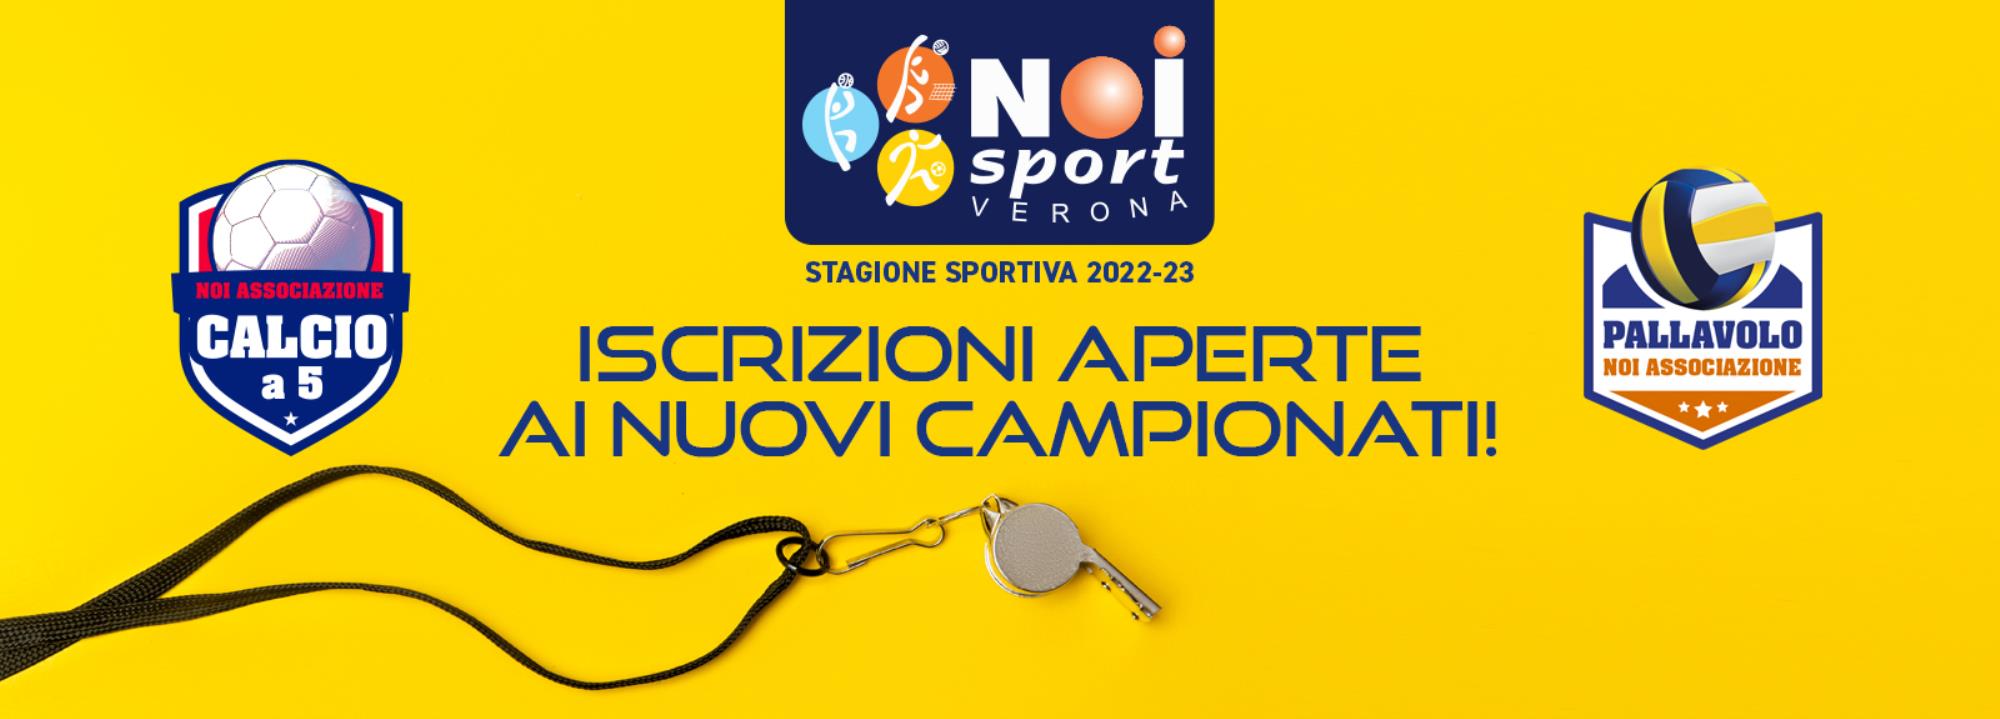 NOI Sport Verona Campionati 2022/2023